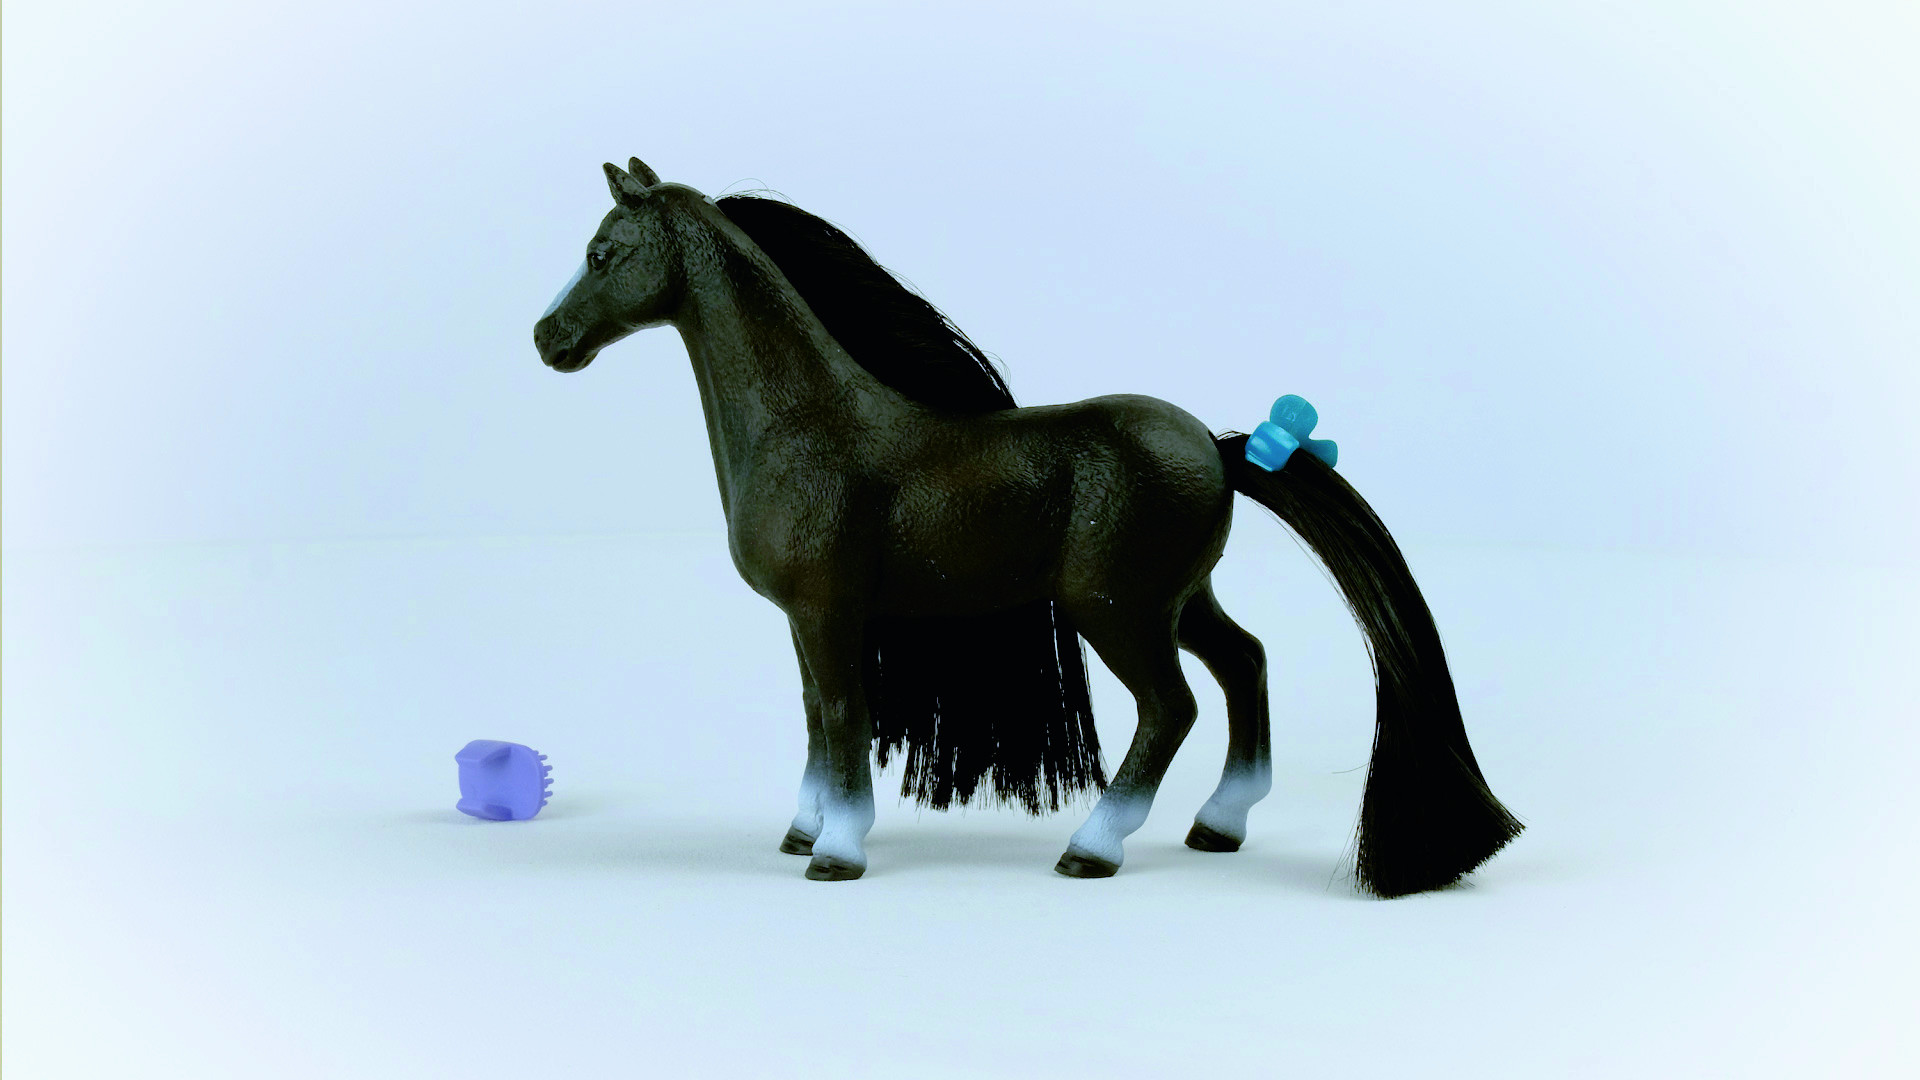 SCHLEICH Stute Horse Spielfigur Schwarz/Mehrfarbig Quarter Horse Beauty Sofia\'s 42620 Beauties